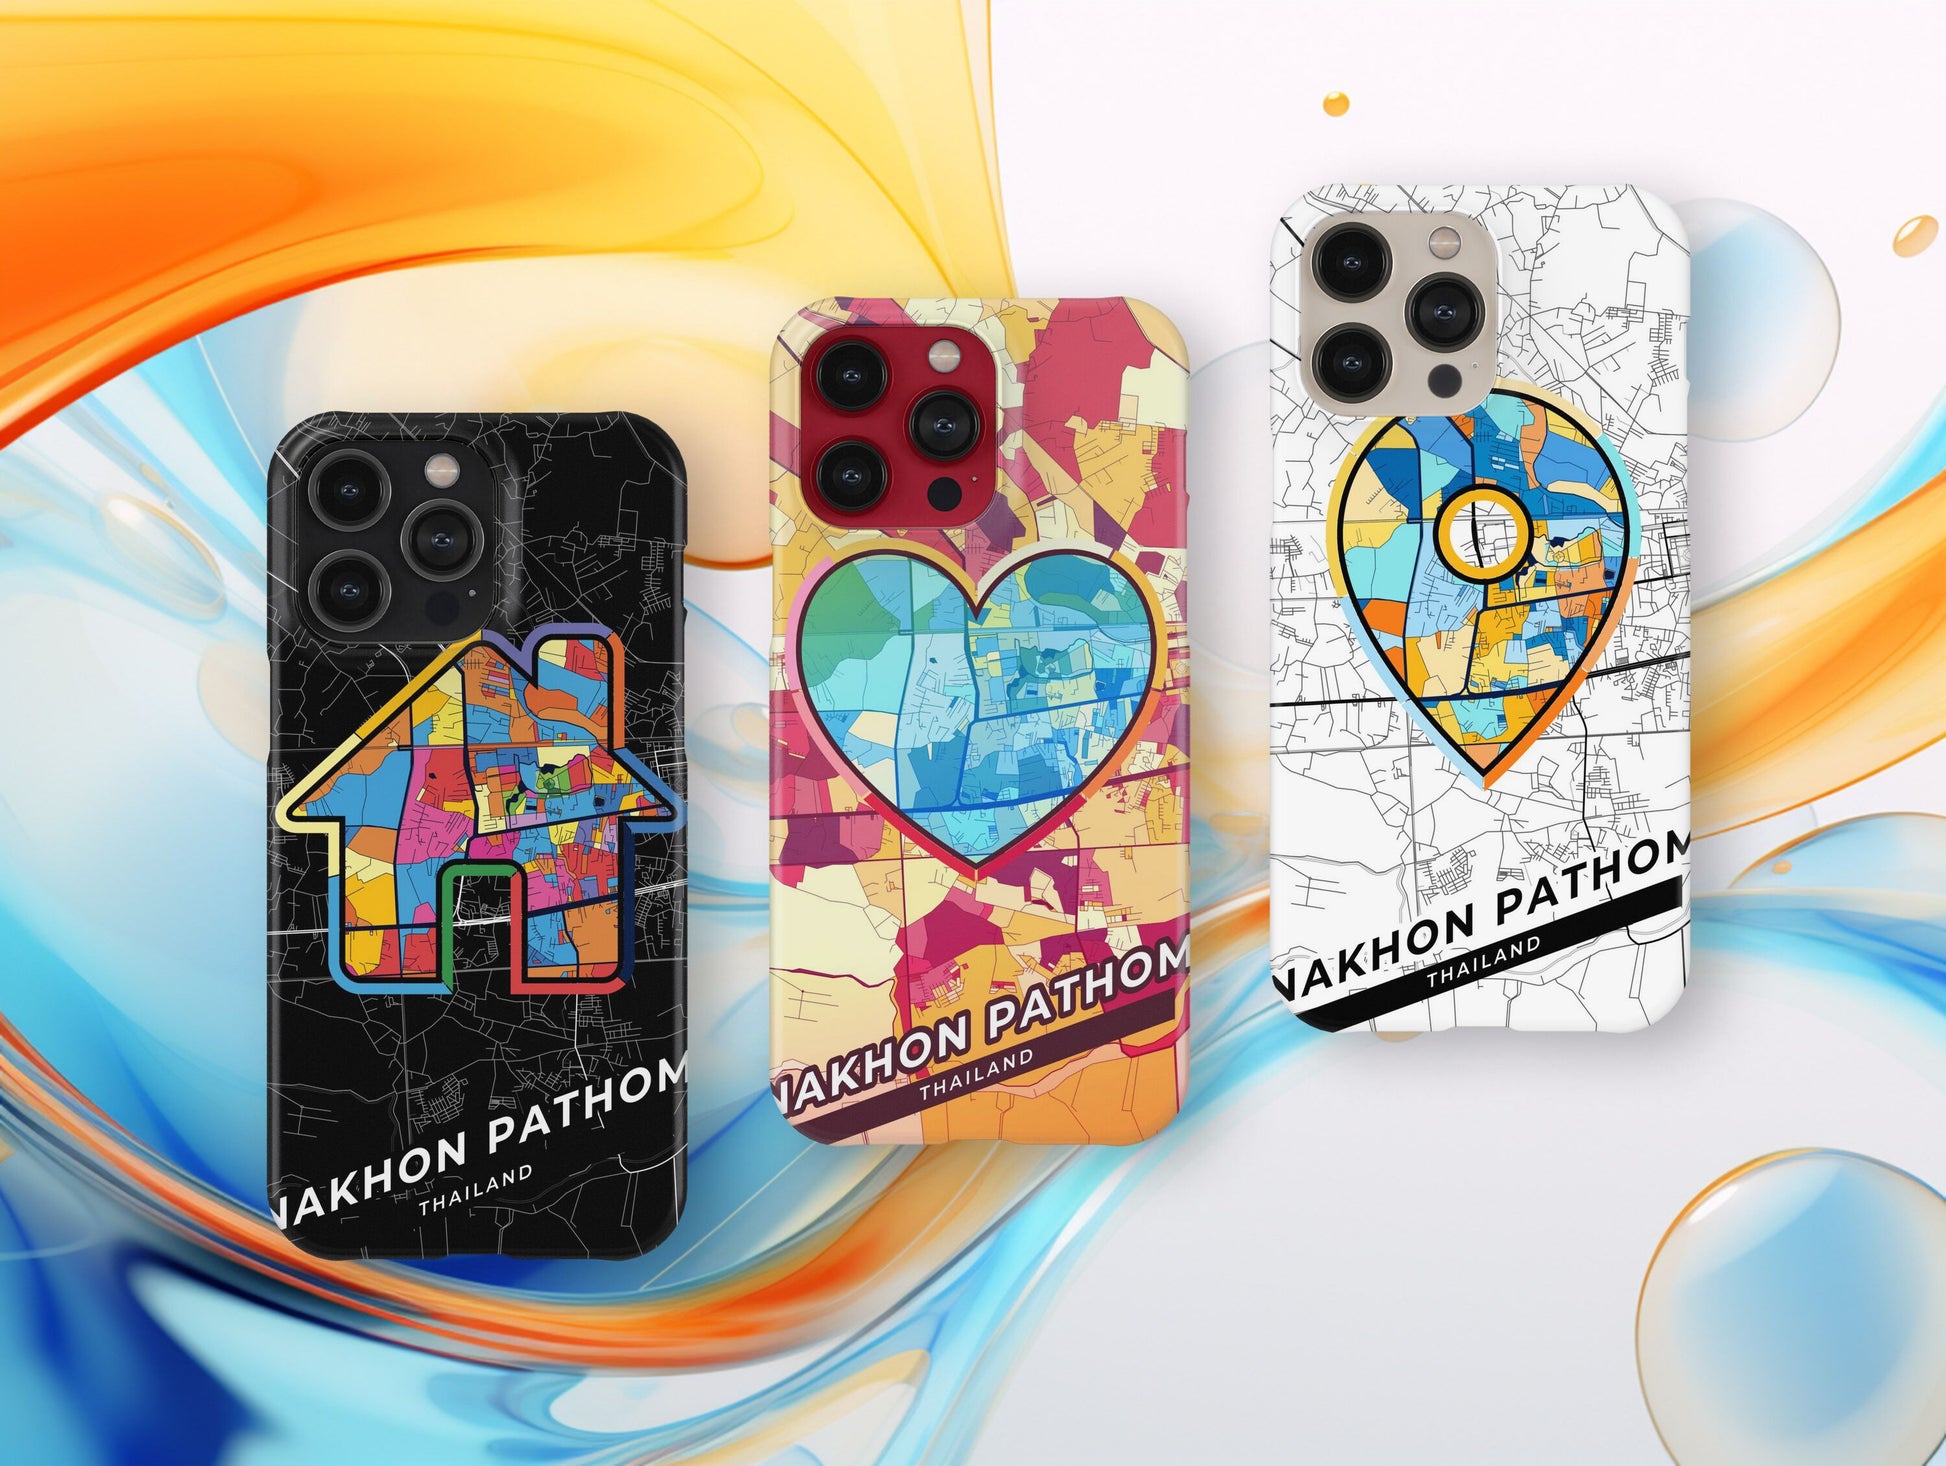 Nakhon Pathom Thailand slim phone case with colorful icon